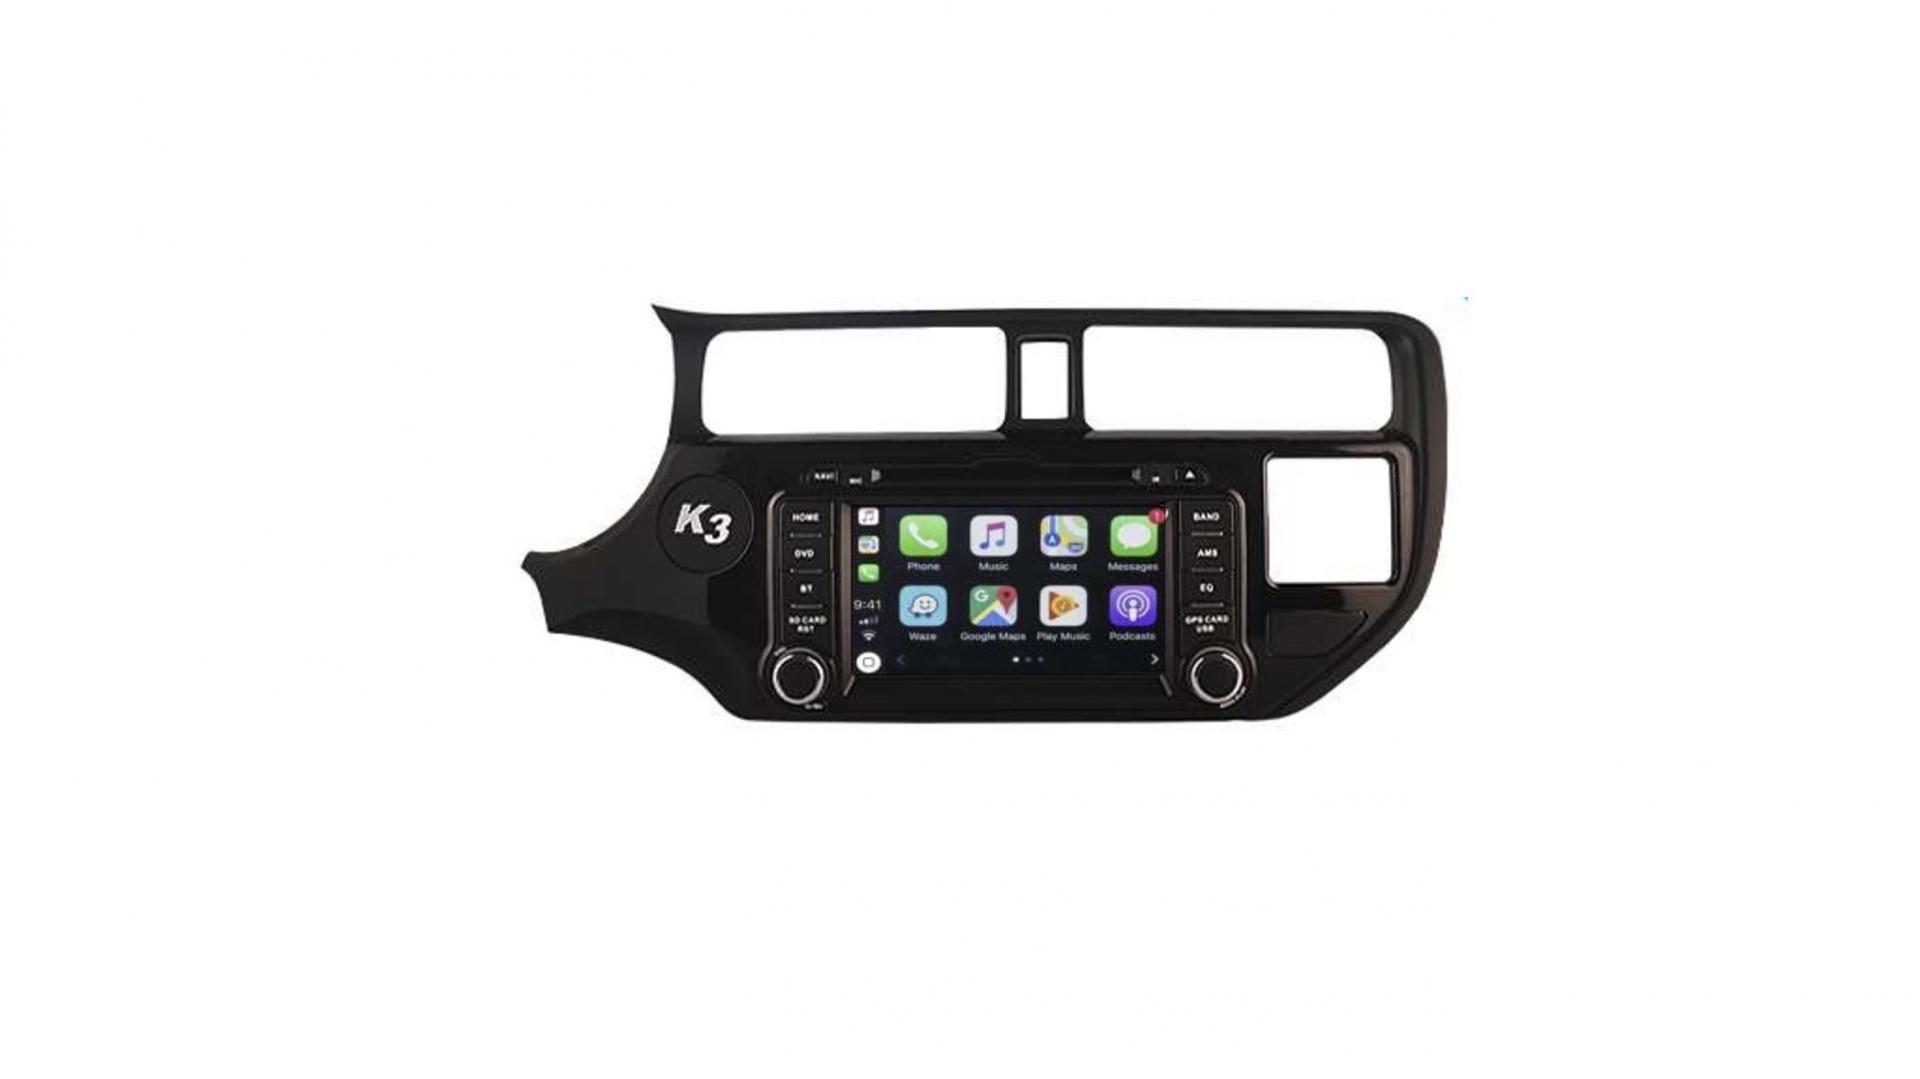 Autoradio androi d auto carplay gps bluetooth kia rio et k3 2011 2013 5